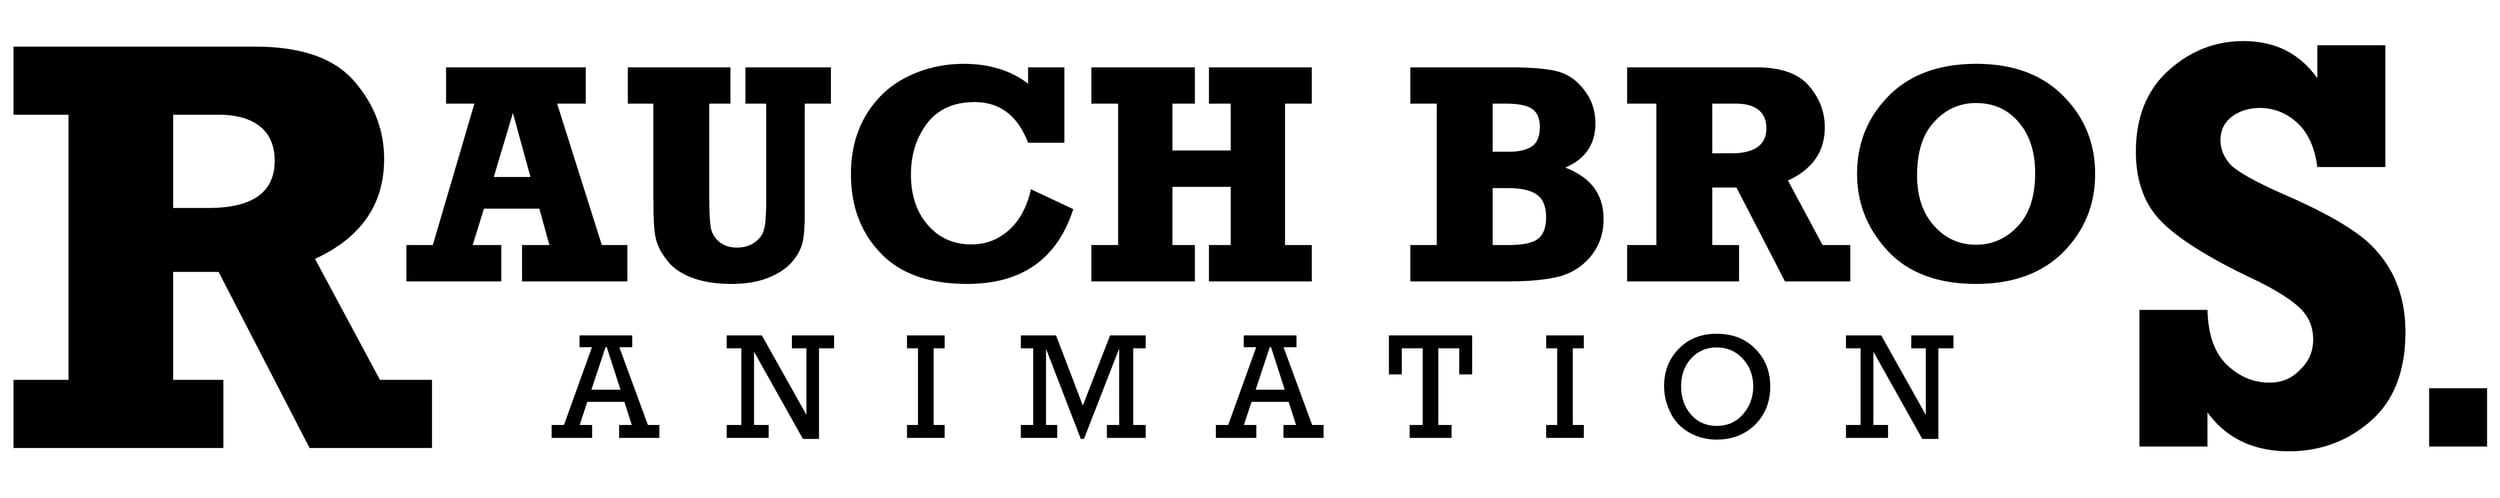 RauchBrothers_logo_bw.jpg